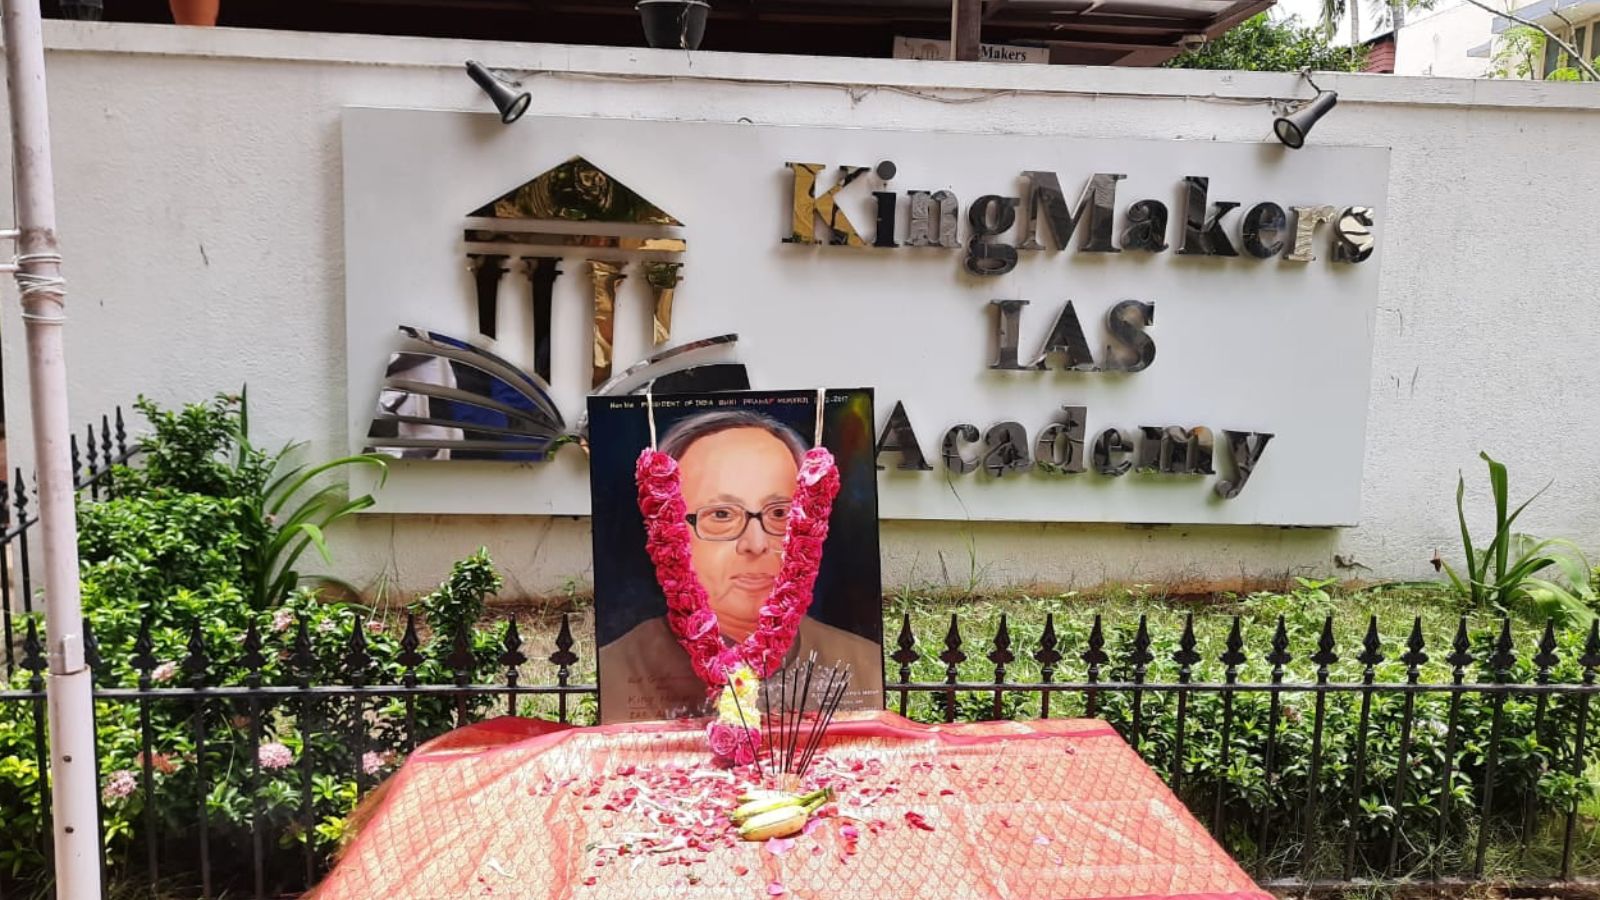 KingMakers IAS Academy Chennai Hero Slider - 2